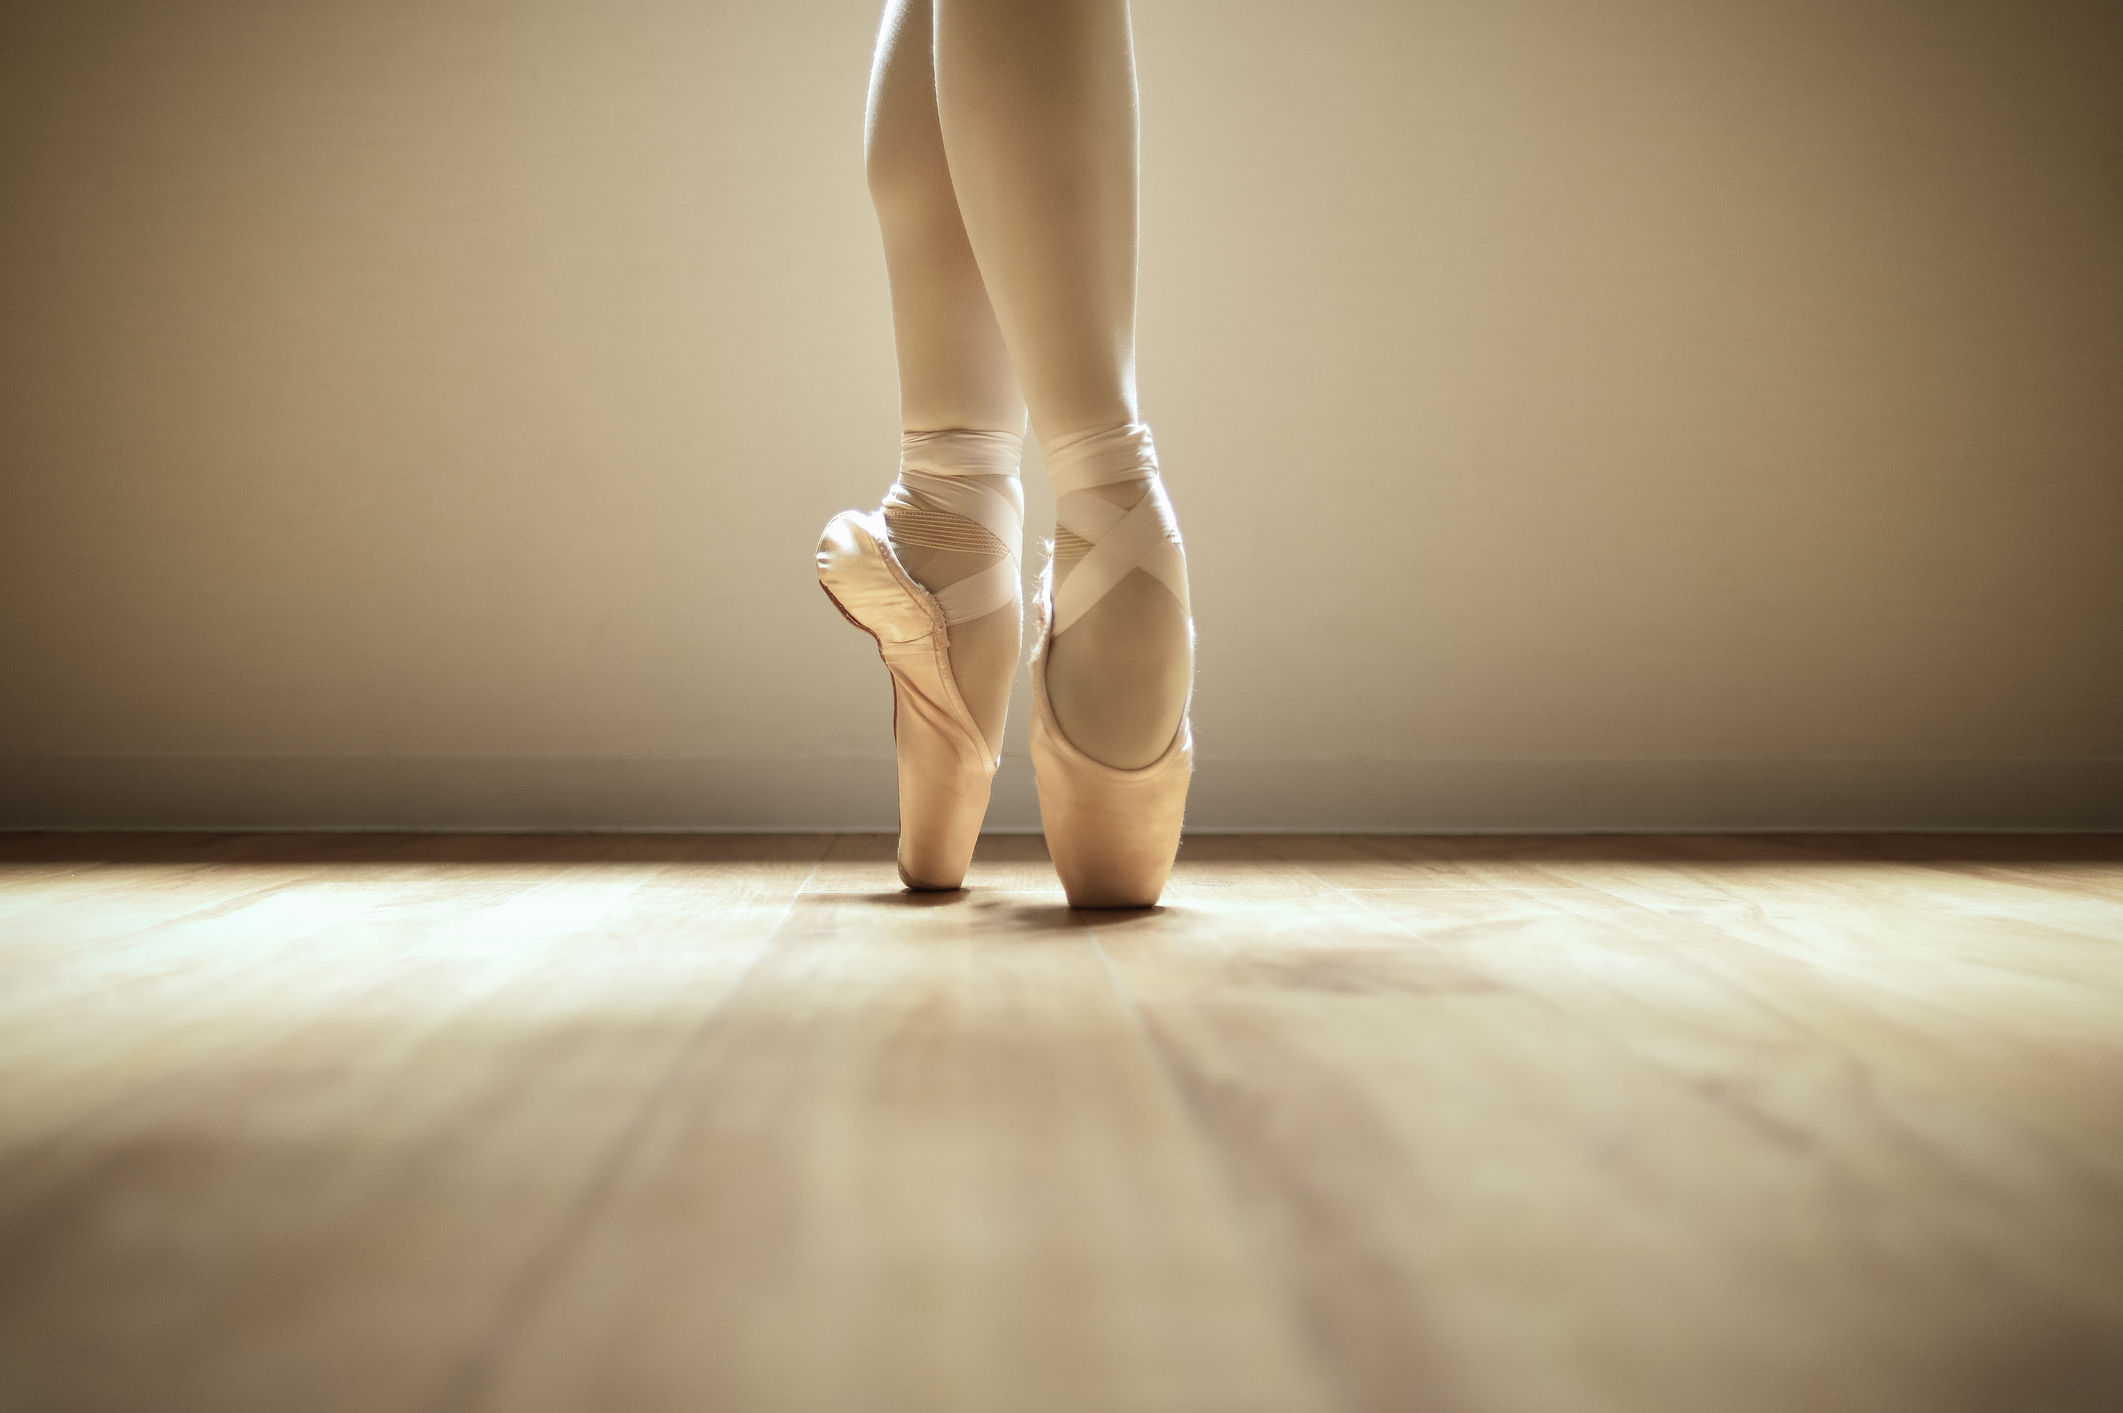 Ballerina standing on toes